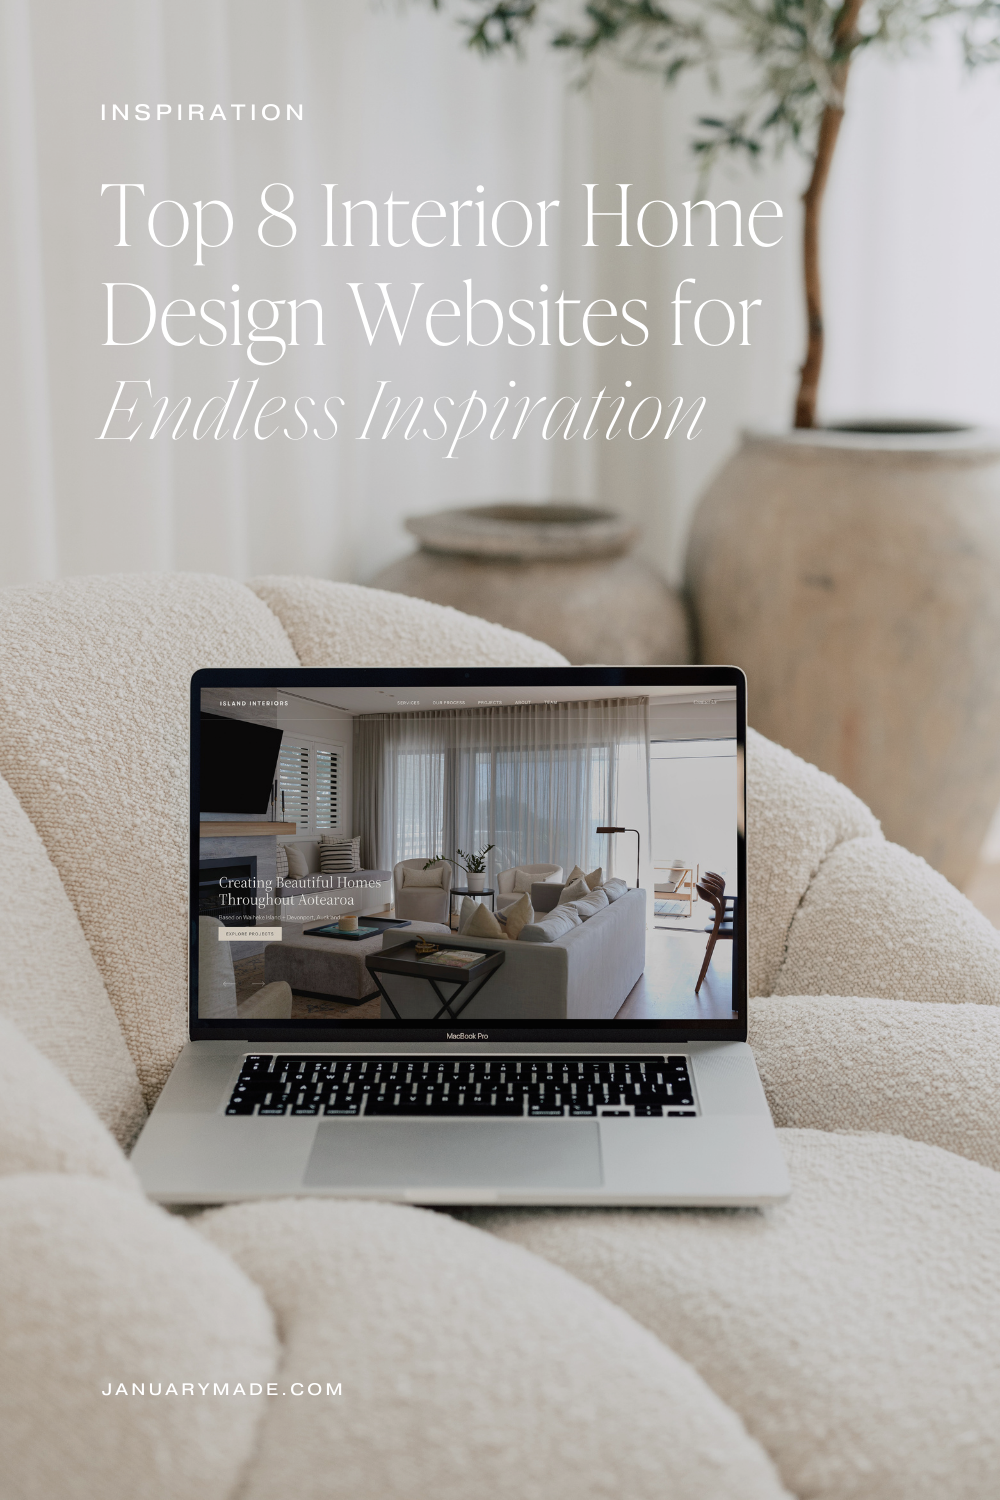 Top 8 Interior Home Design Websites for Endless Inspiration